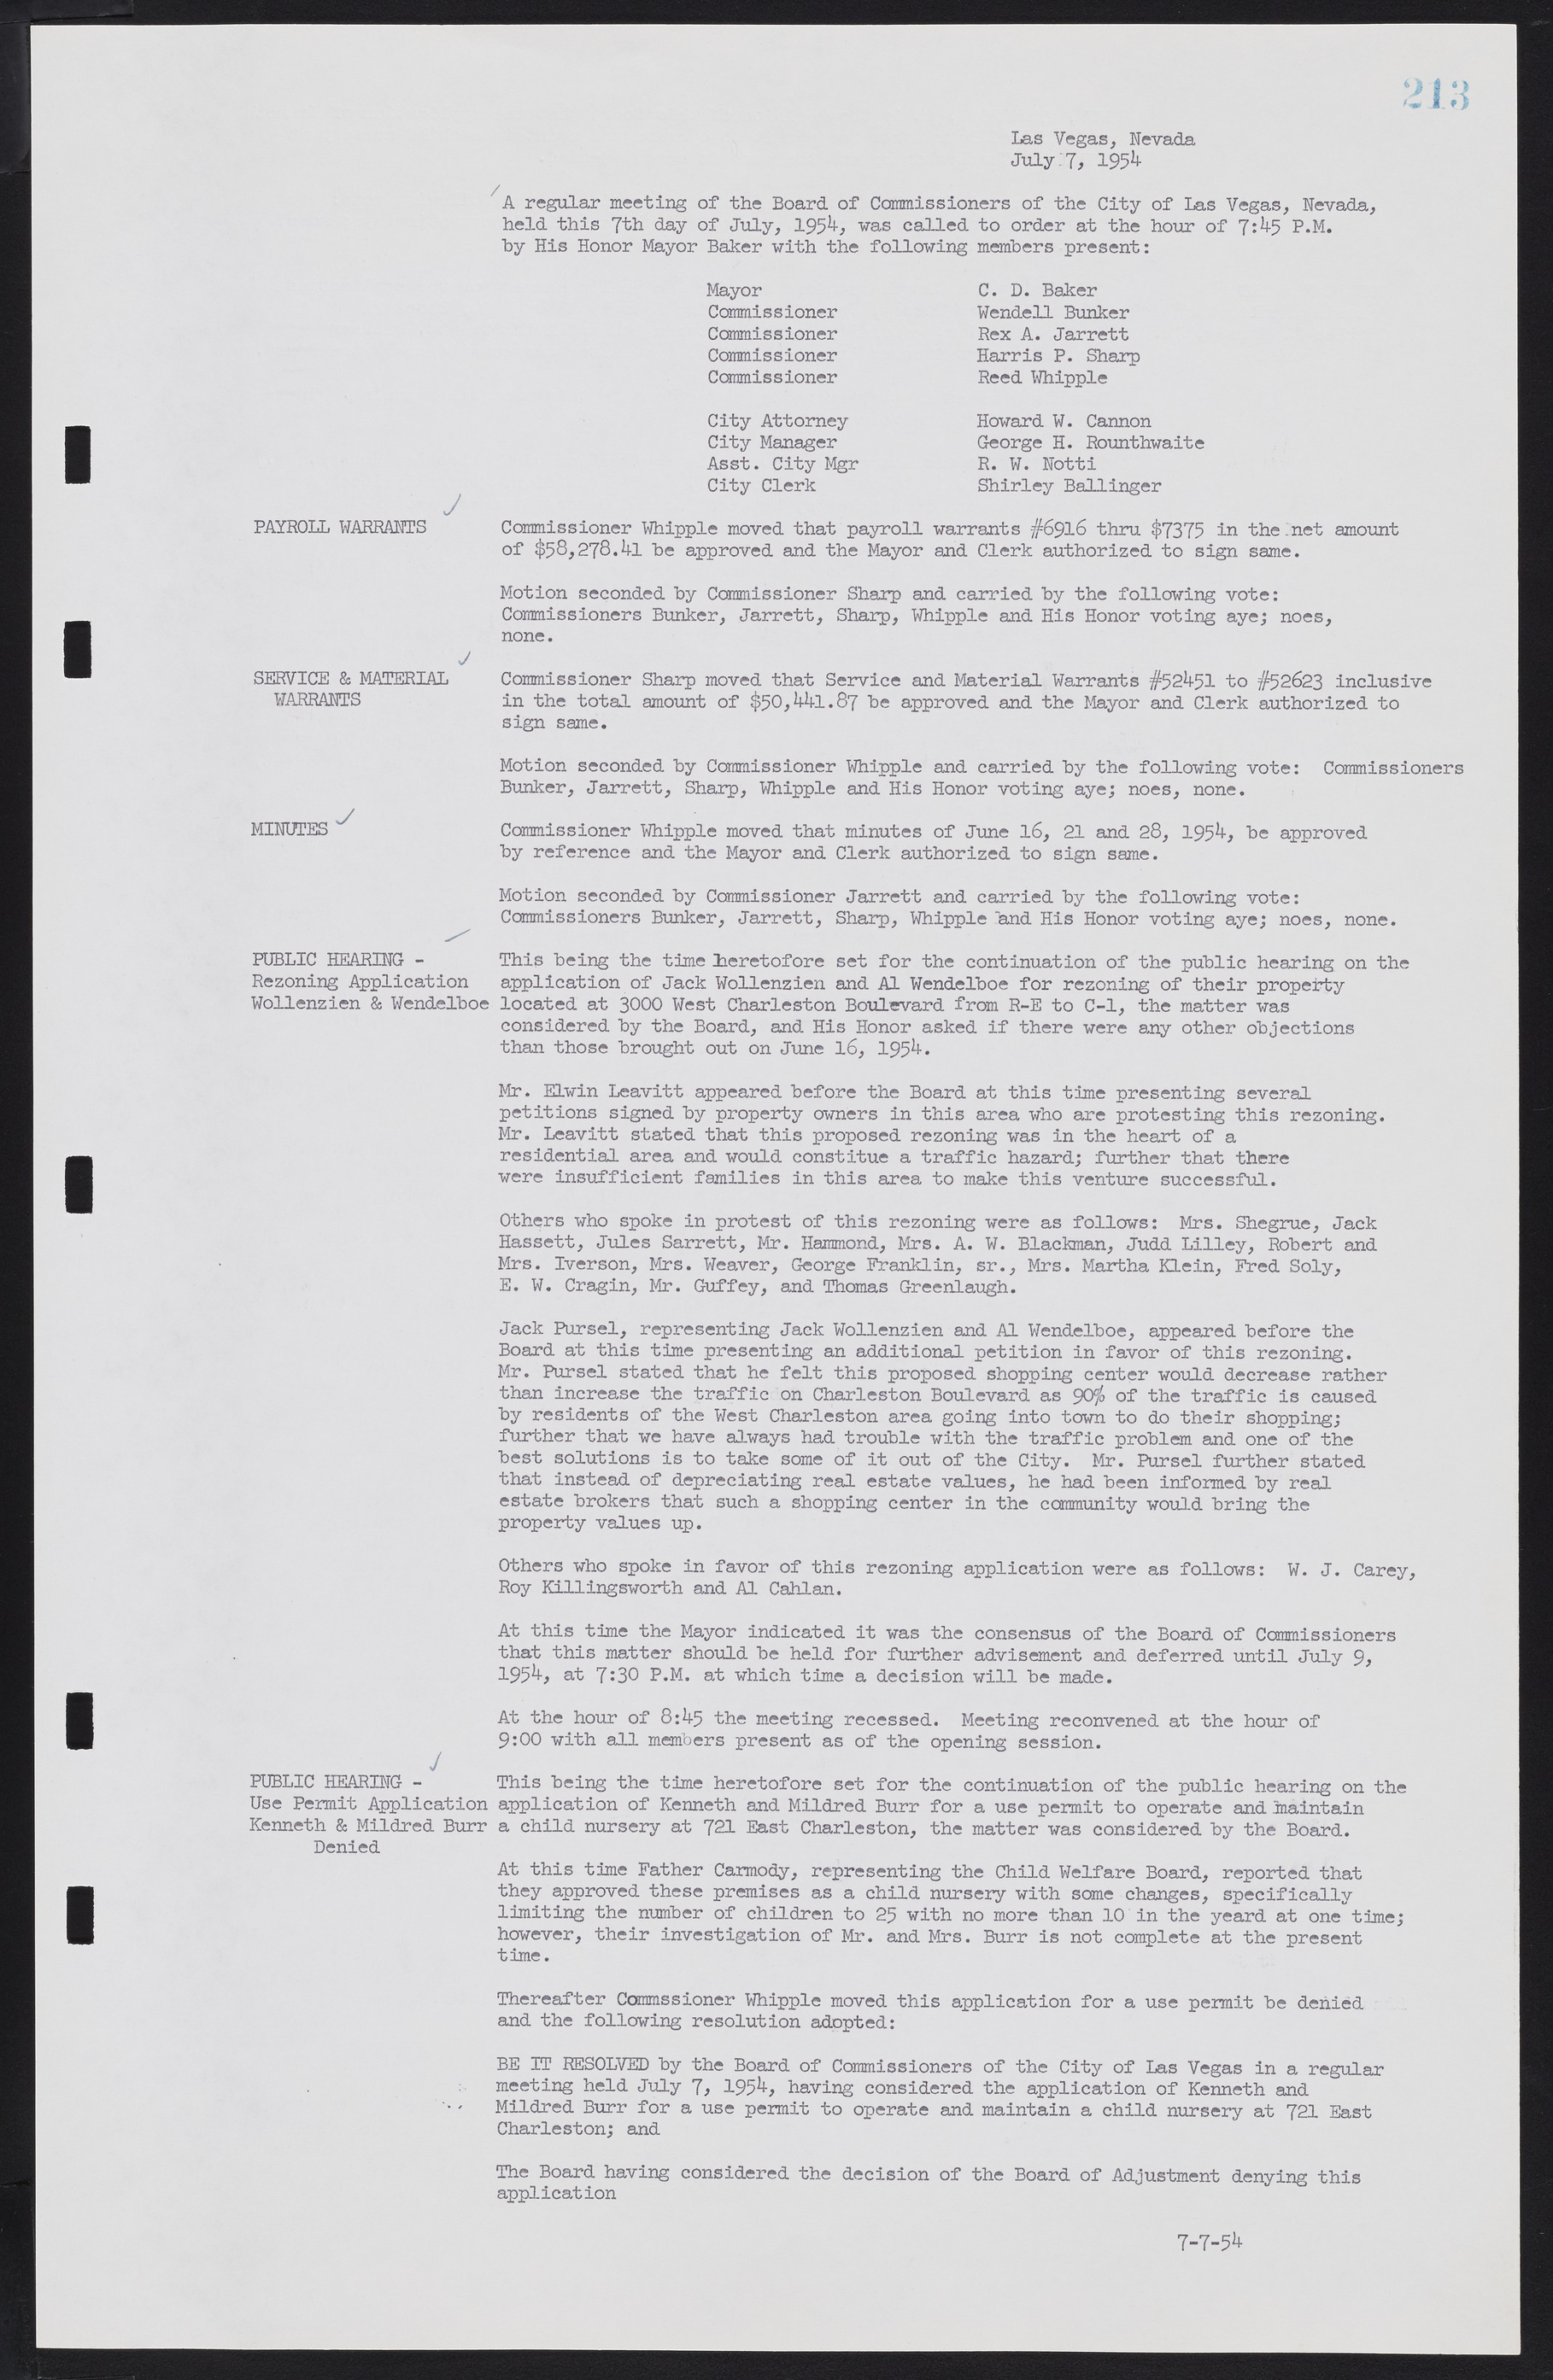 Las Vegas City Commission Minutes, February 17, 1954 to September 21, 1955, lvc000009-219